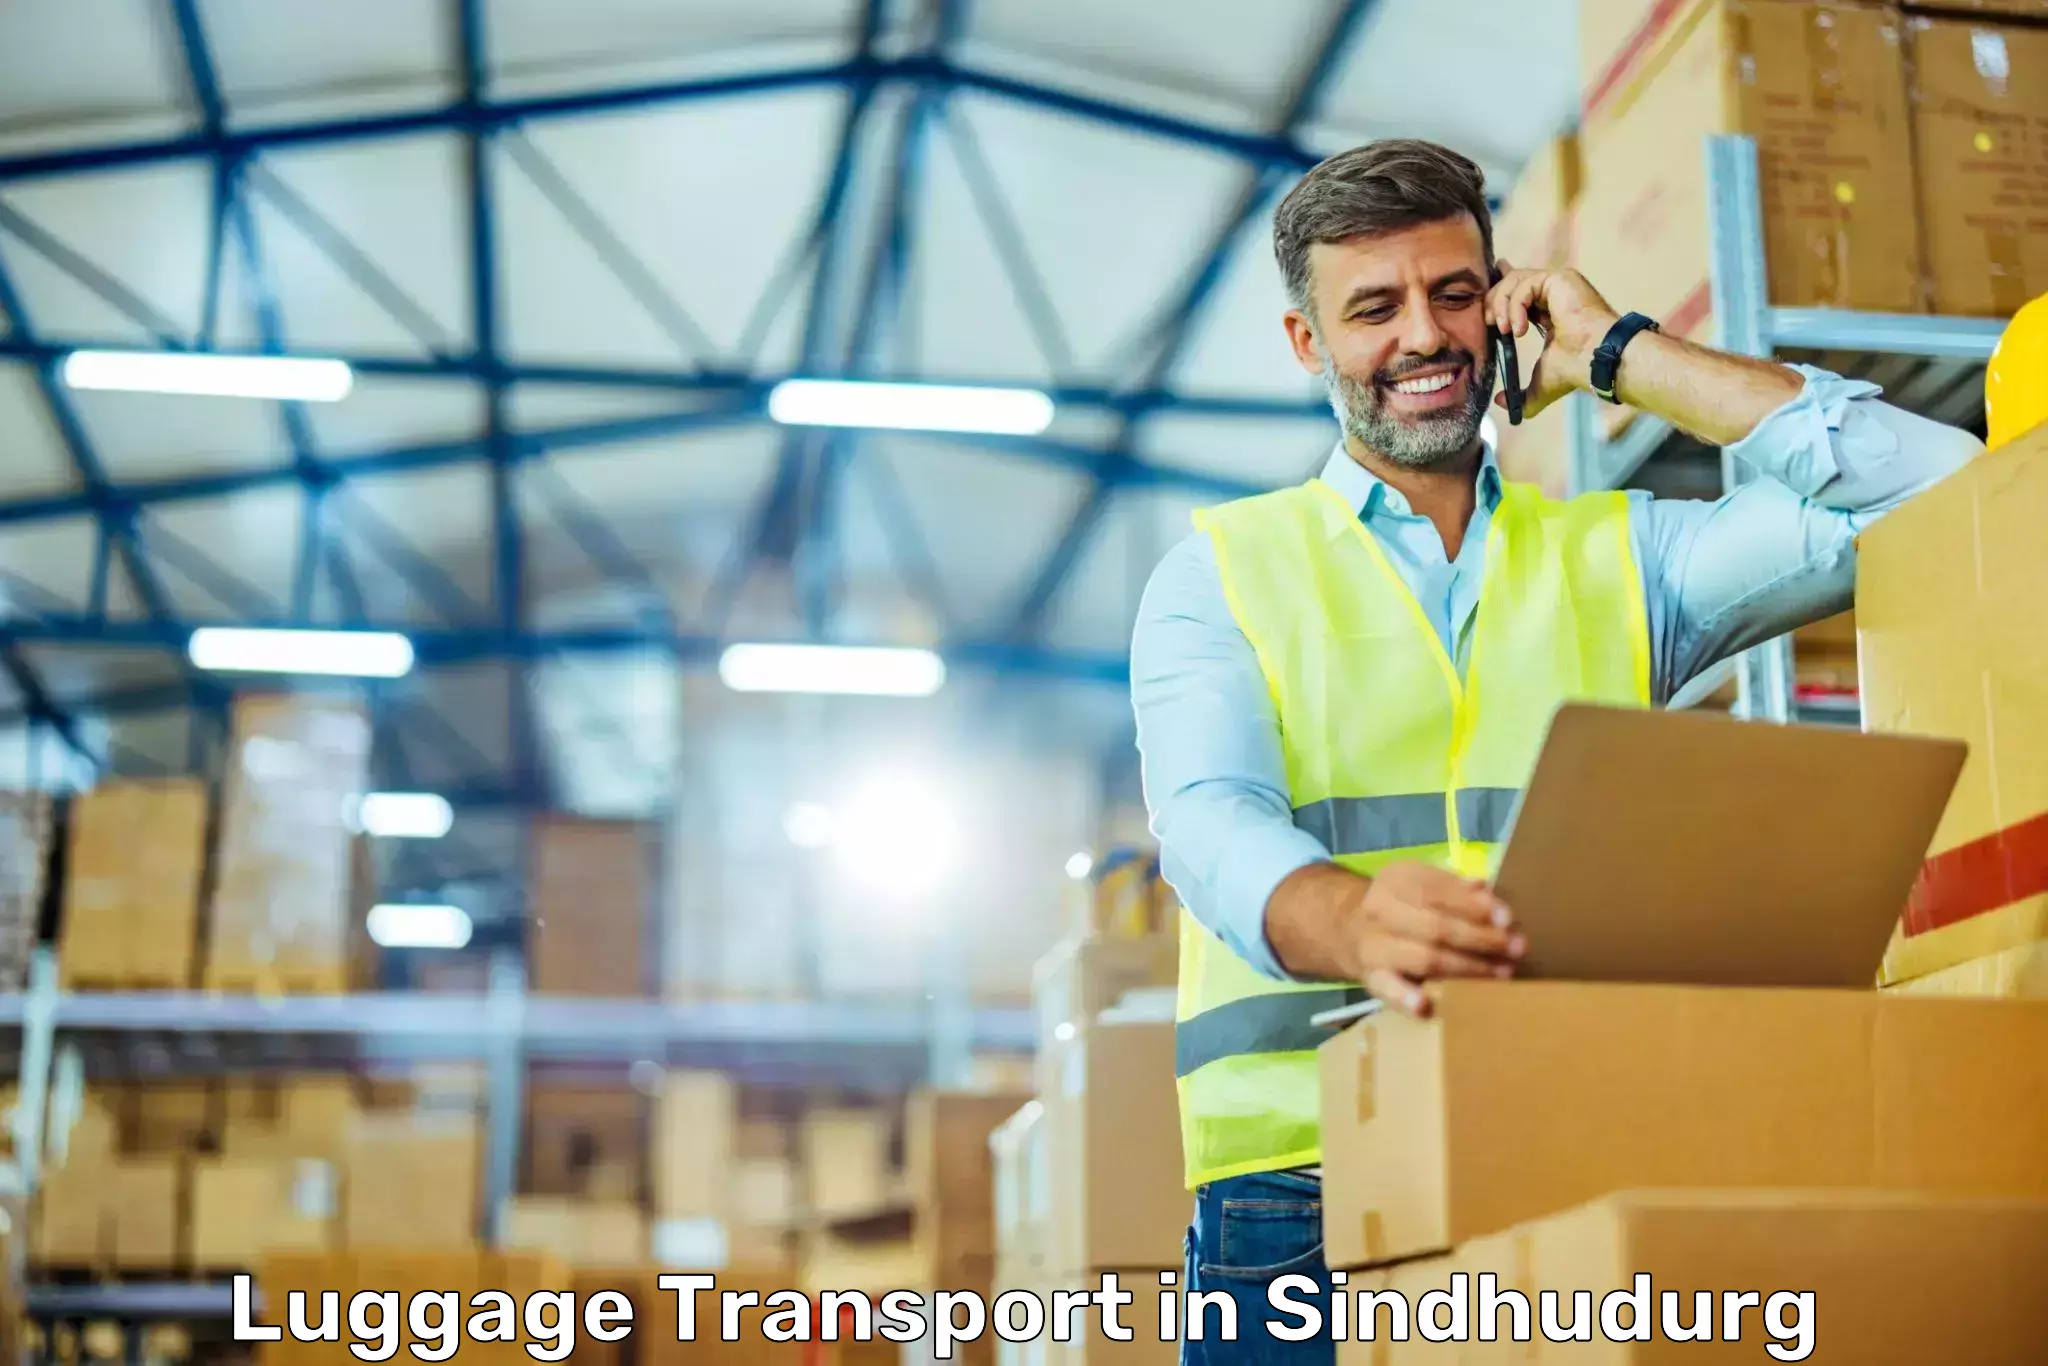 Business luggage transport in Sindhudurg